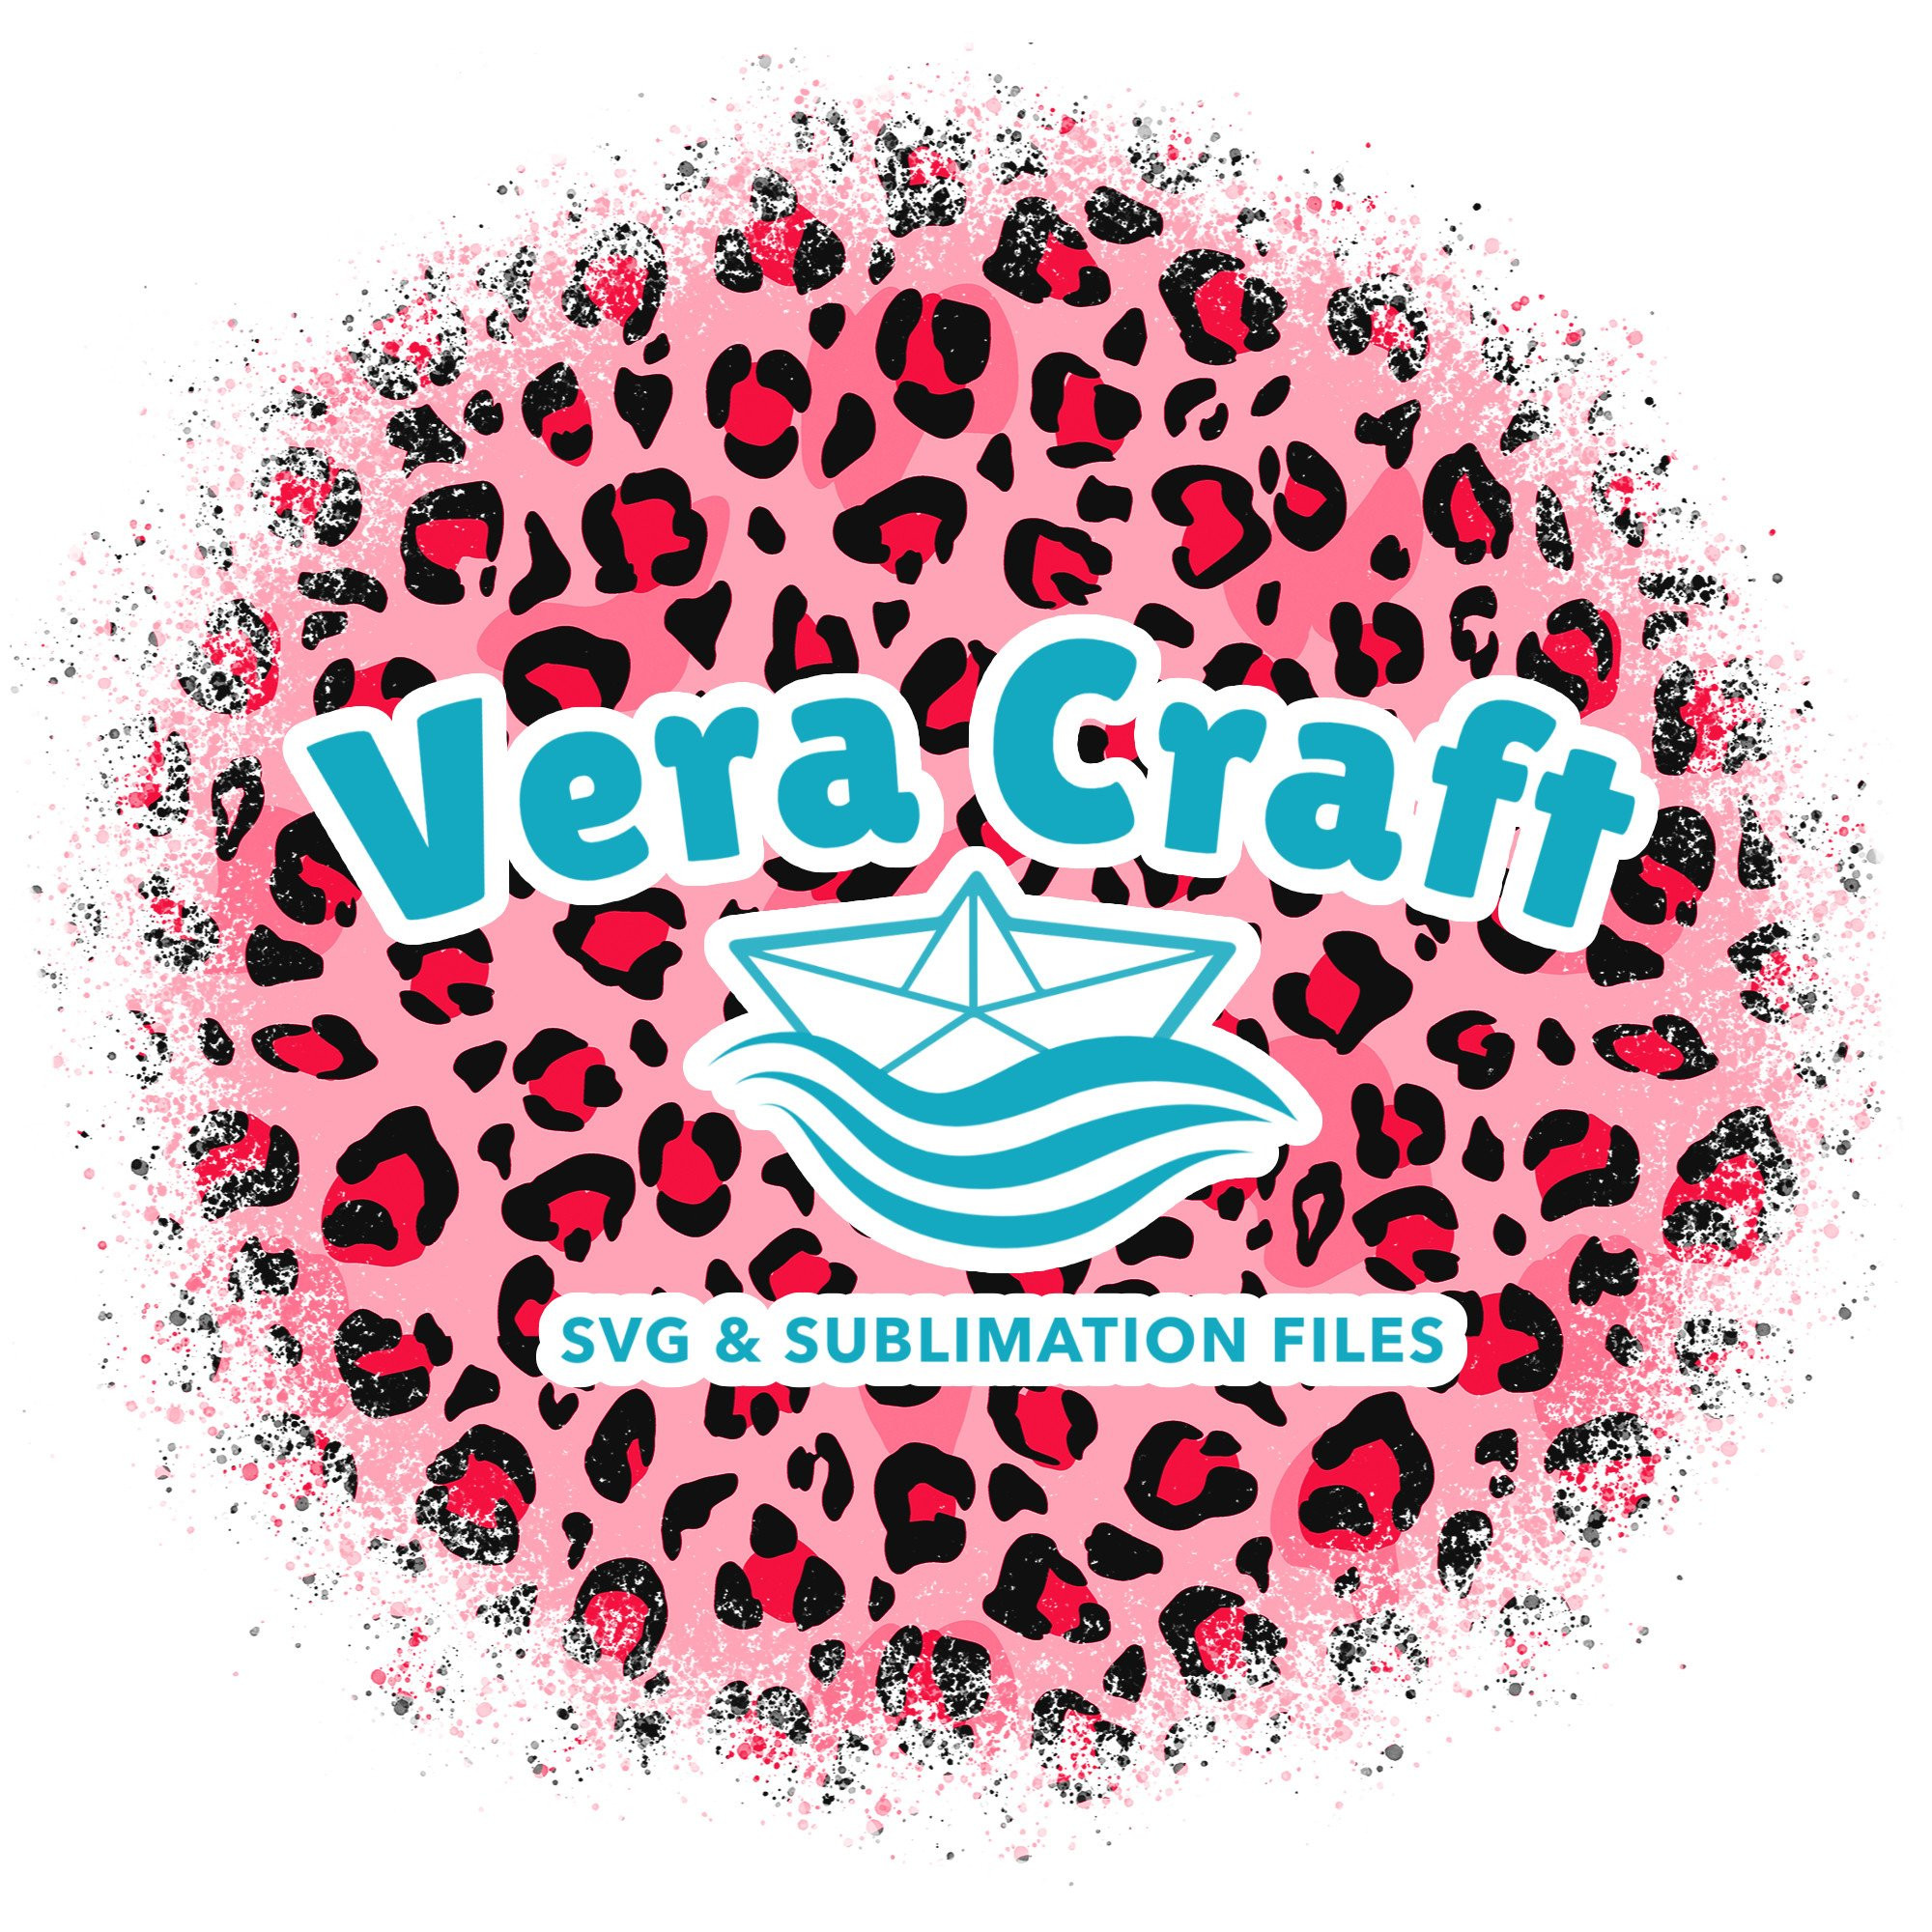 Vera Craft - zdjÄcie profilowe